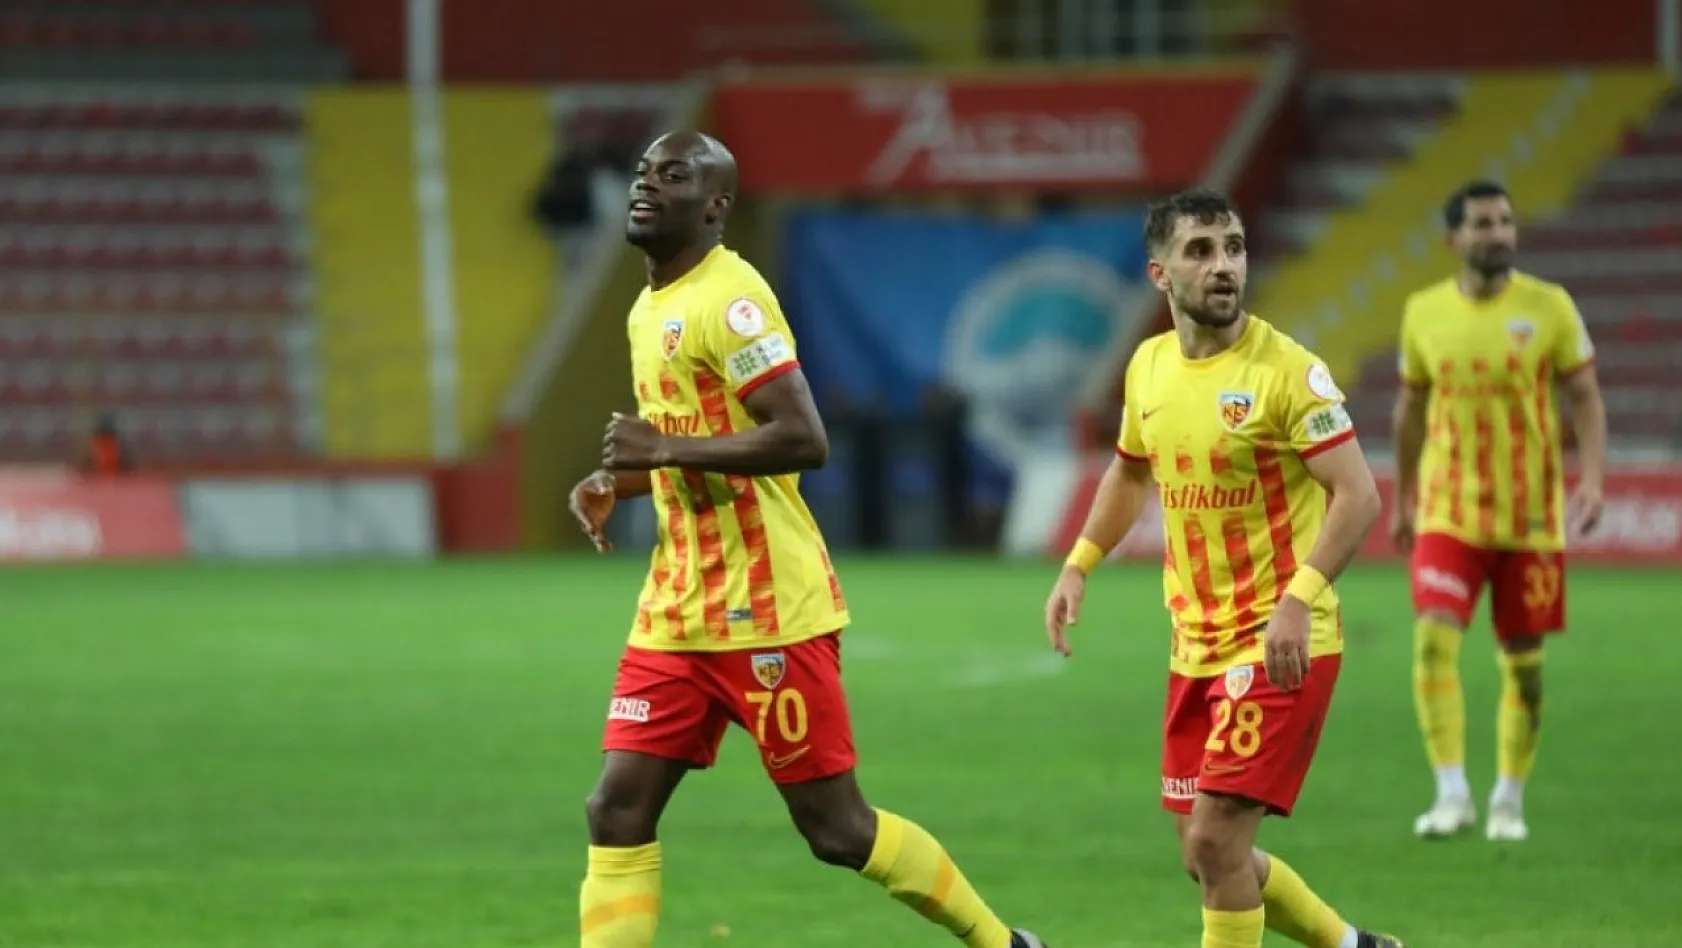 Kayserisporlu futbolcu 3 dakikada 2 gol attı